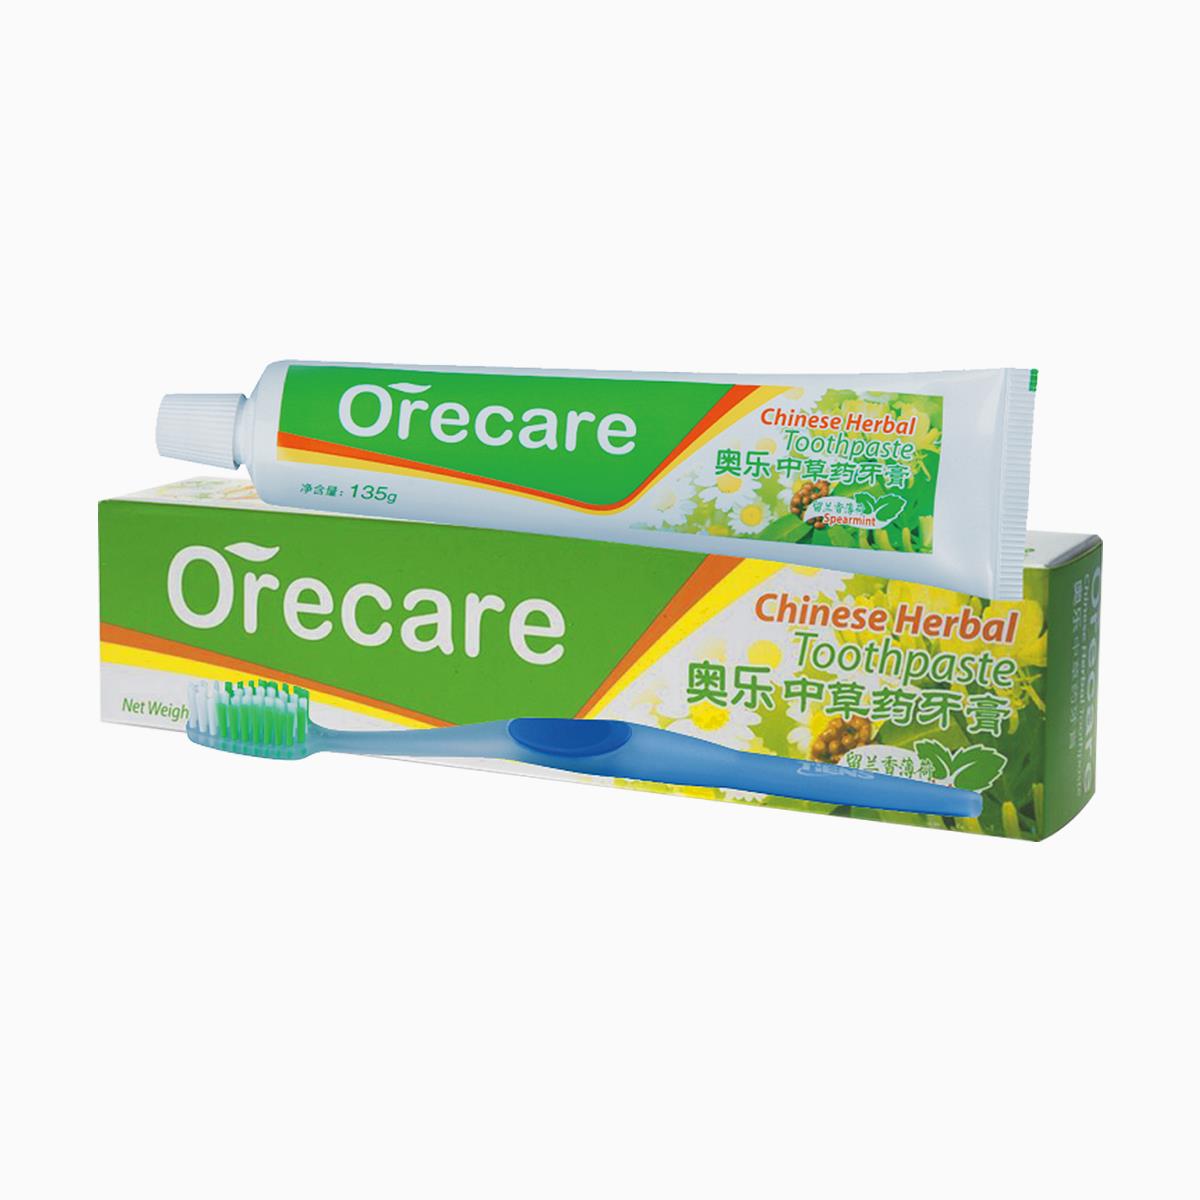 Tianshi Orecare Chinese Herbal Toothpaste - Hutch.pk Online Fashion ...